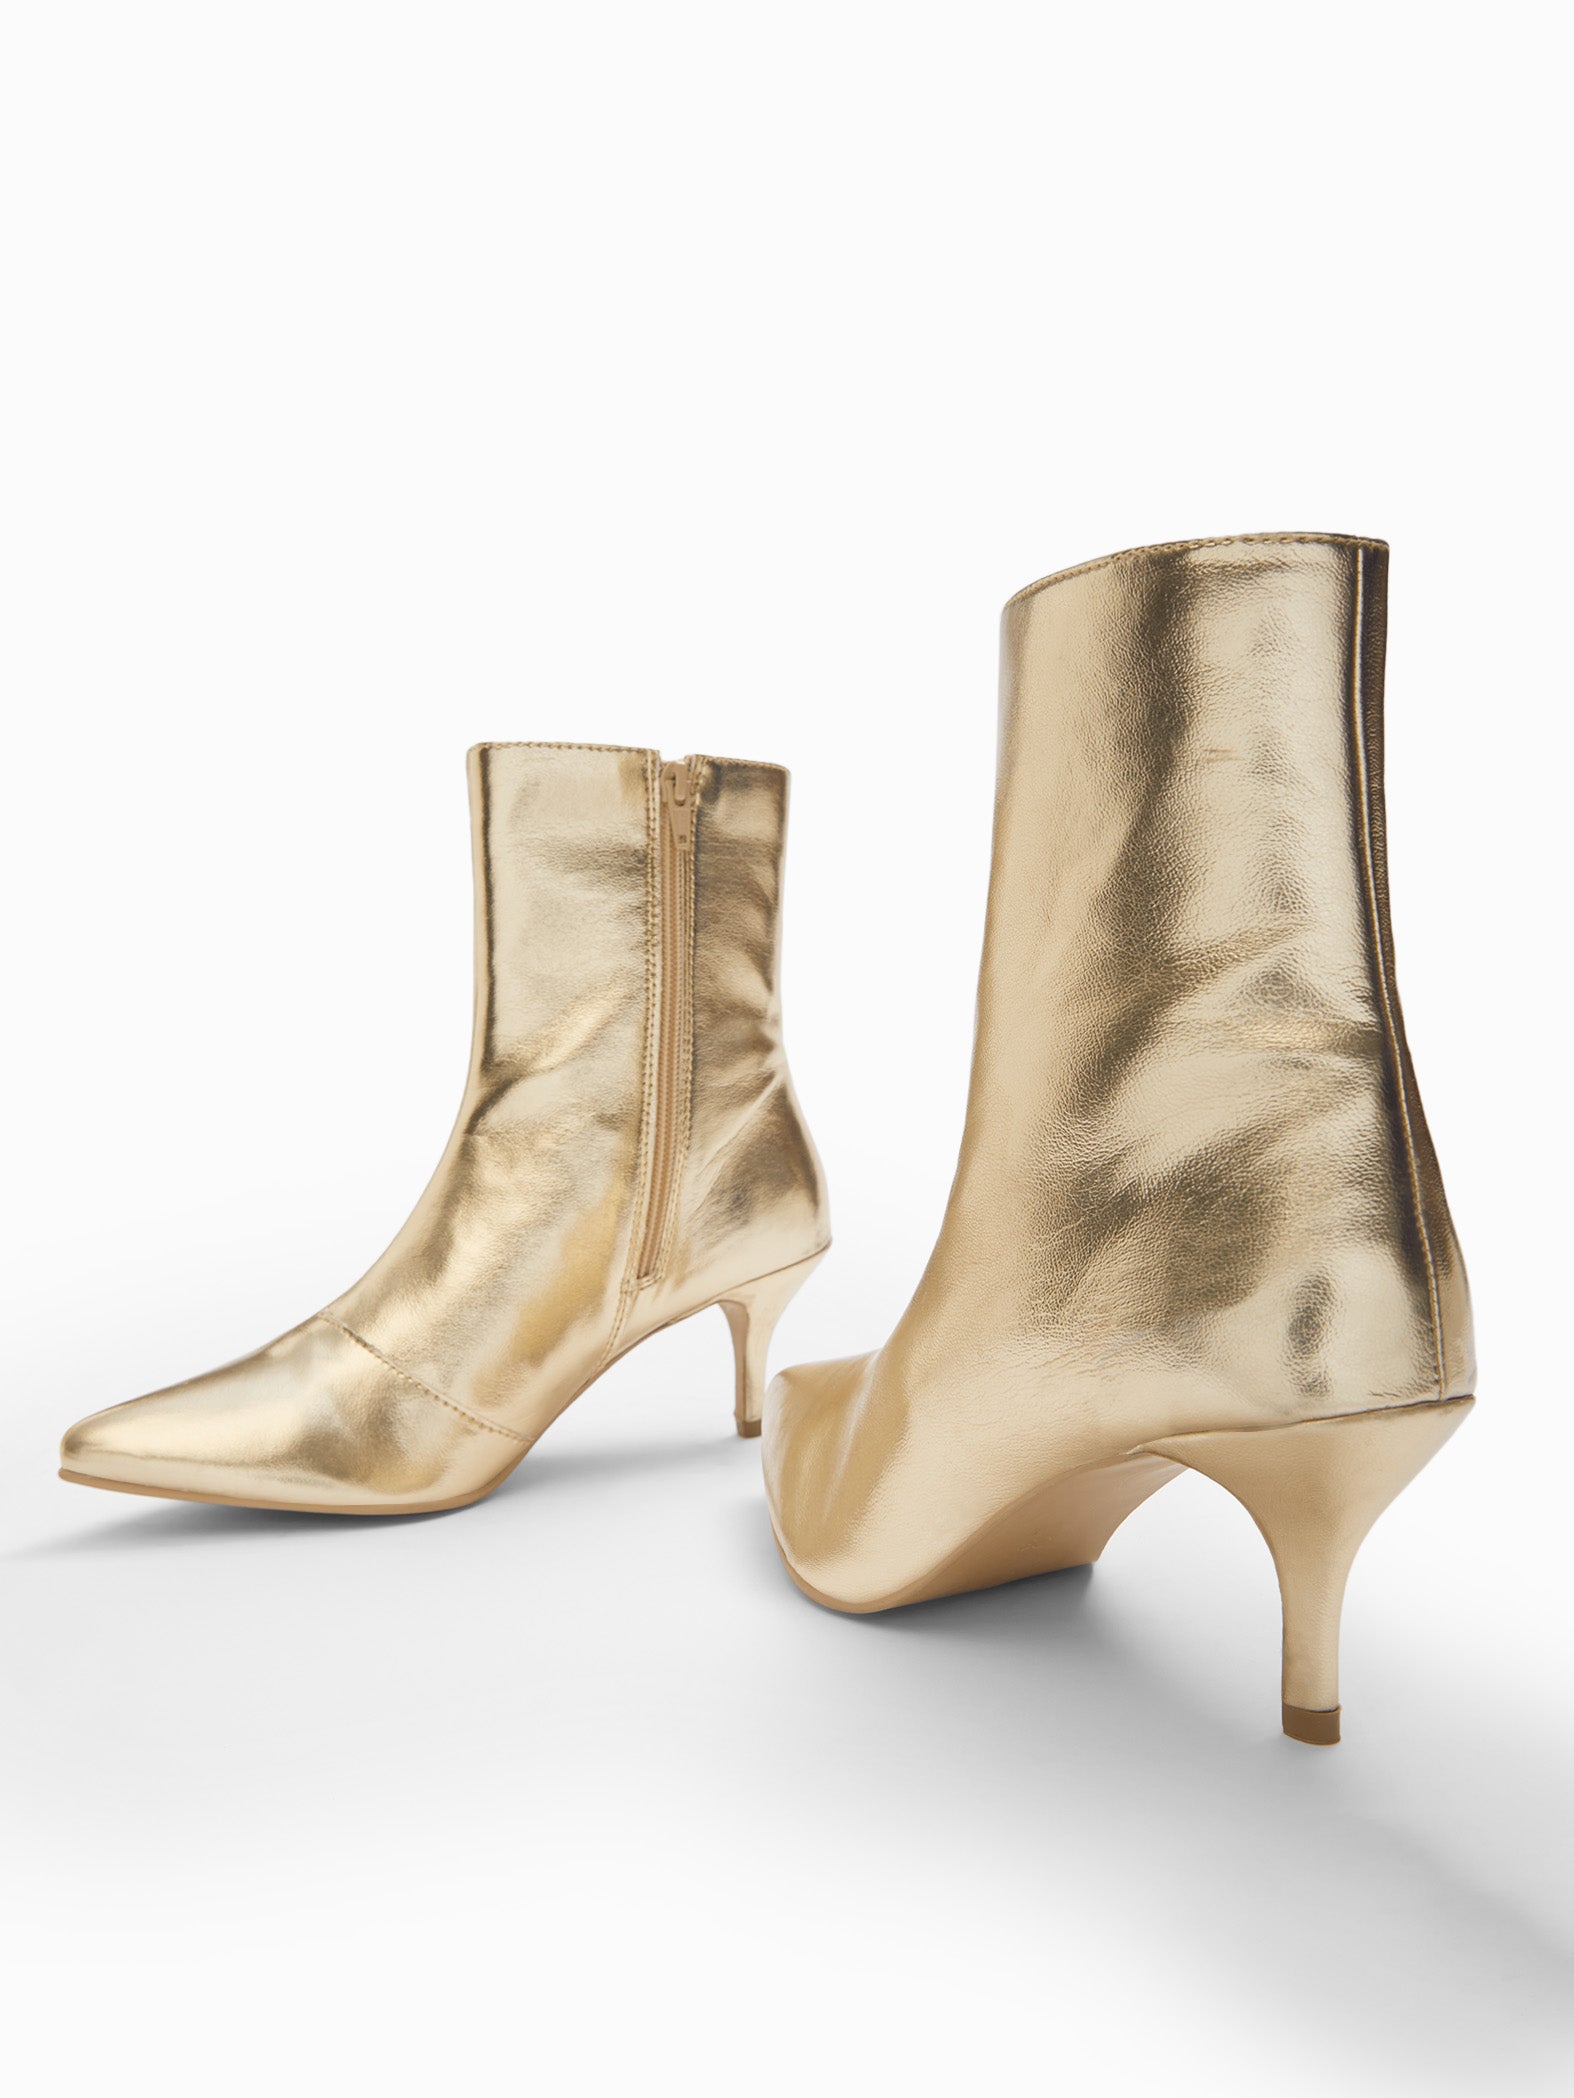 Metallic Gold Stiletto Boots